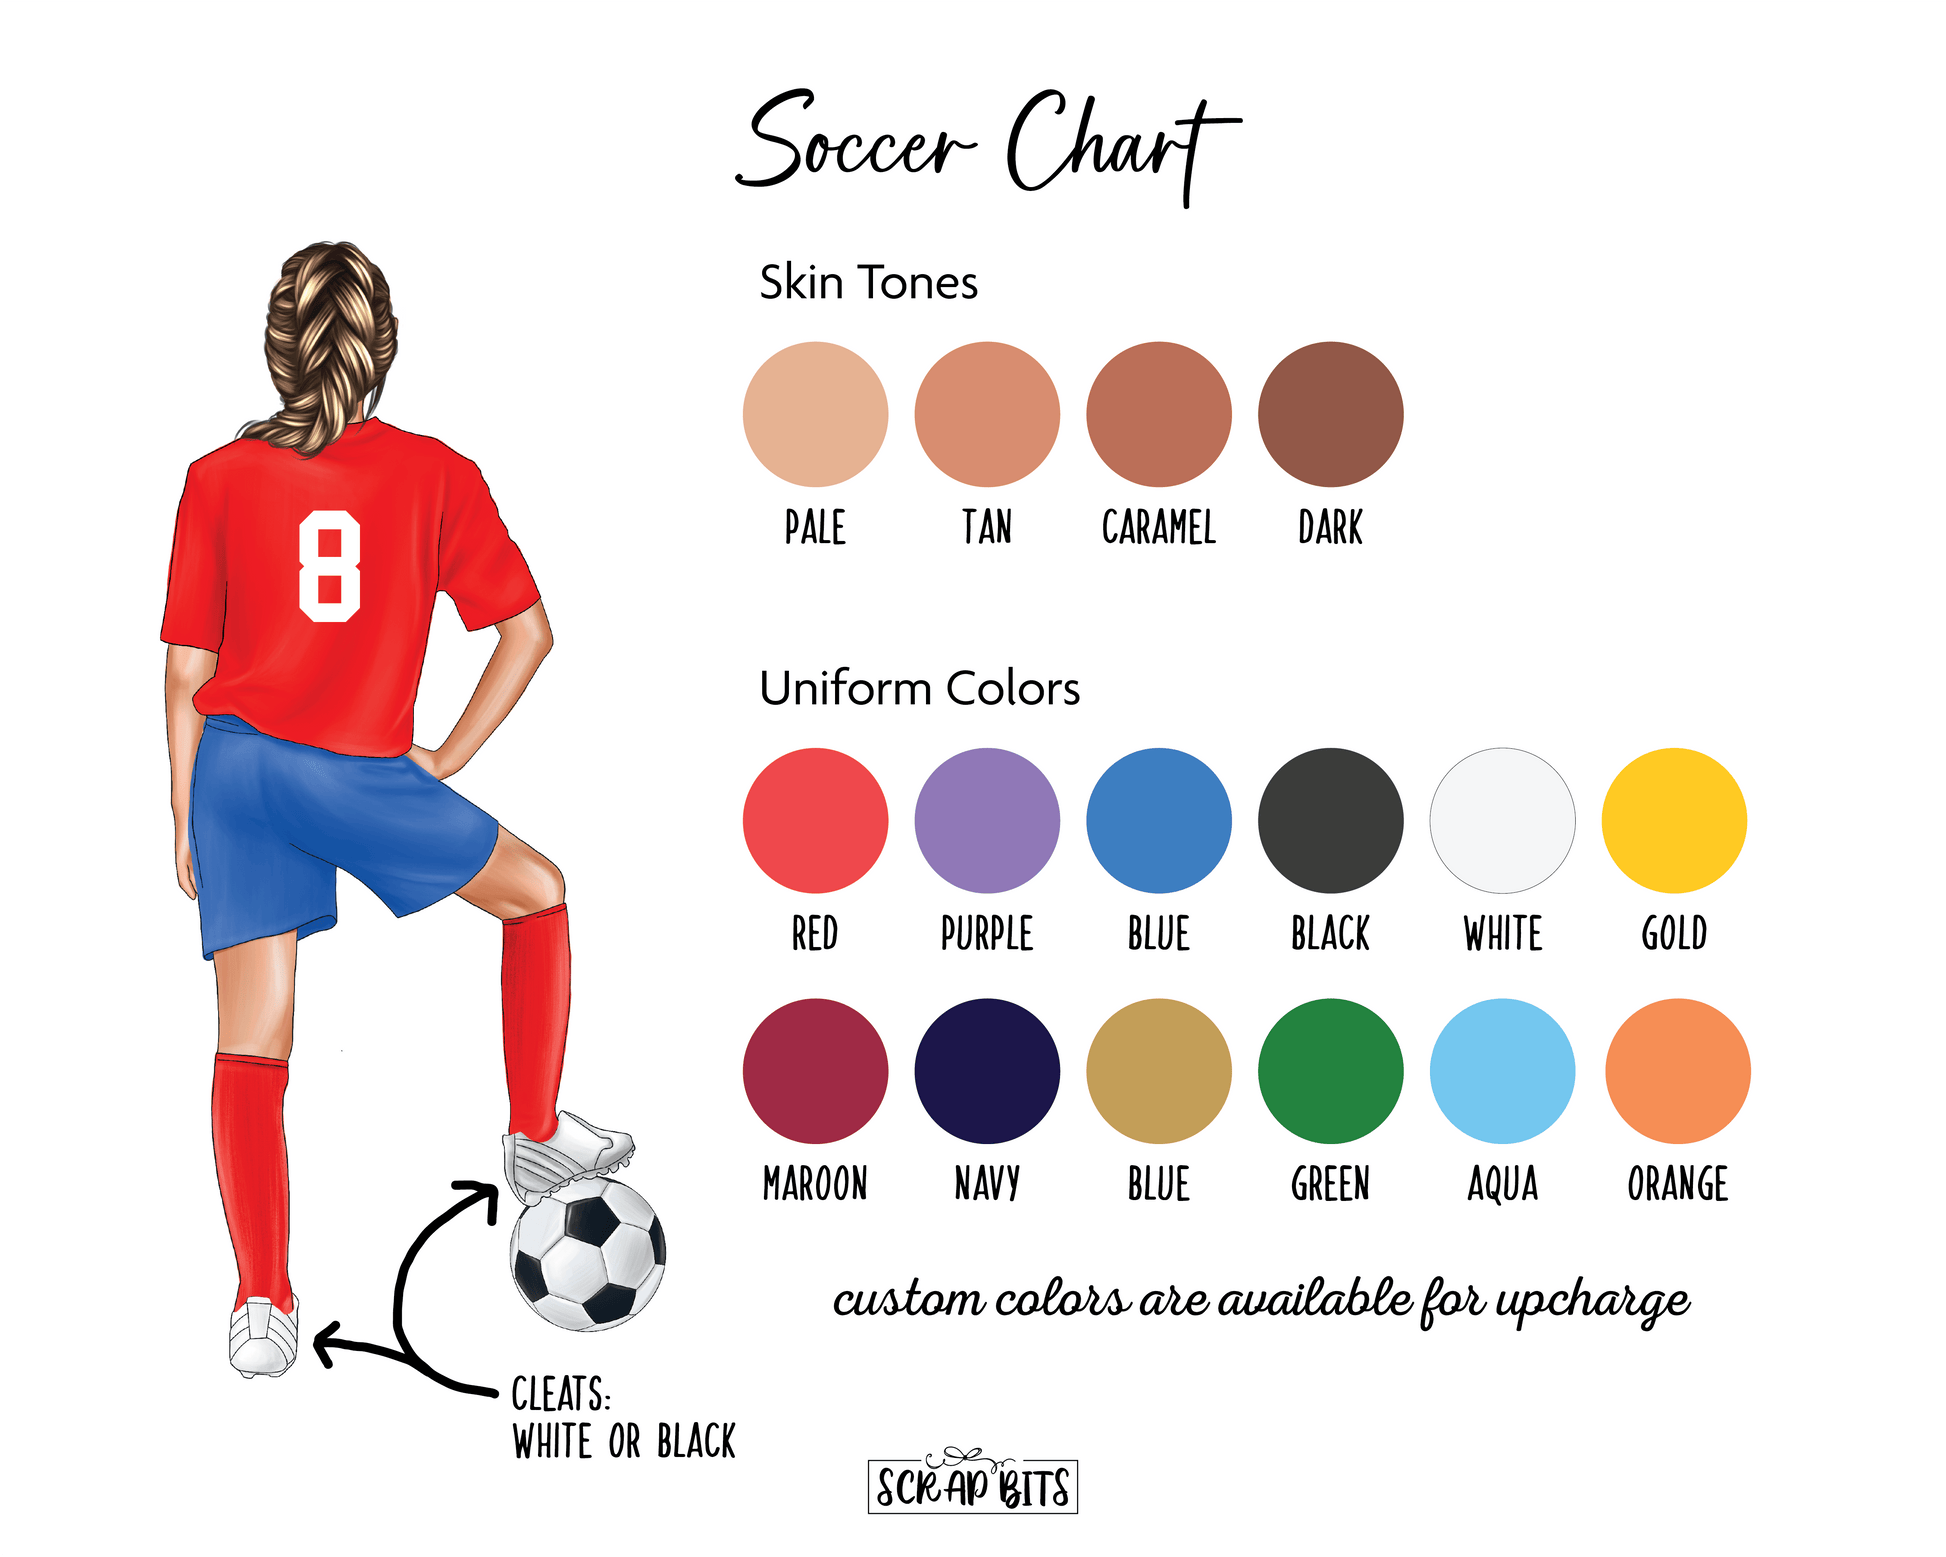 Soccer Best Friends, Custom Soccer Female Soccer Print . Personalized Digital Portrait Print - Scrap Bits